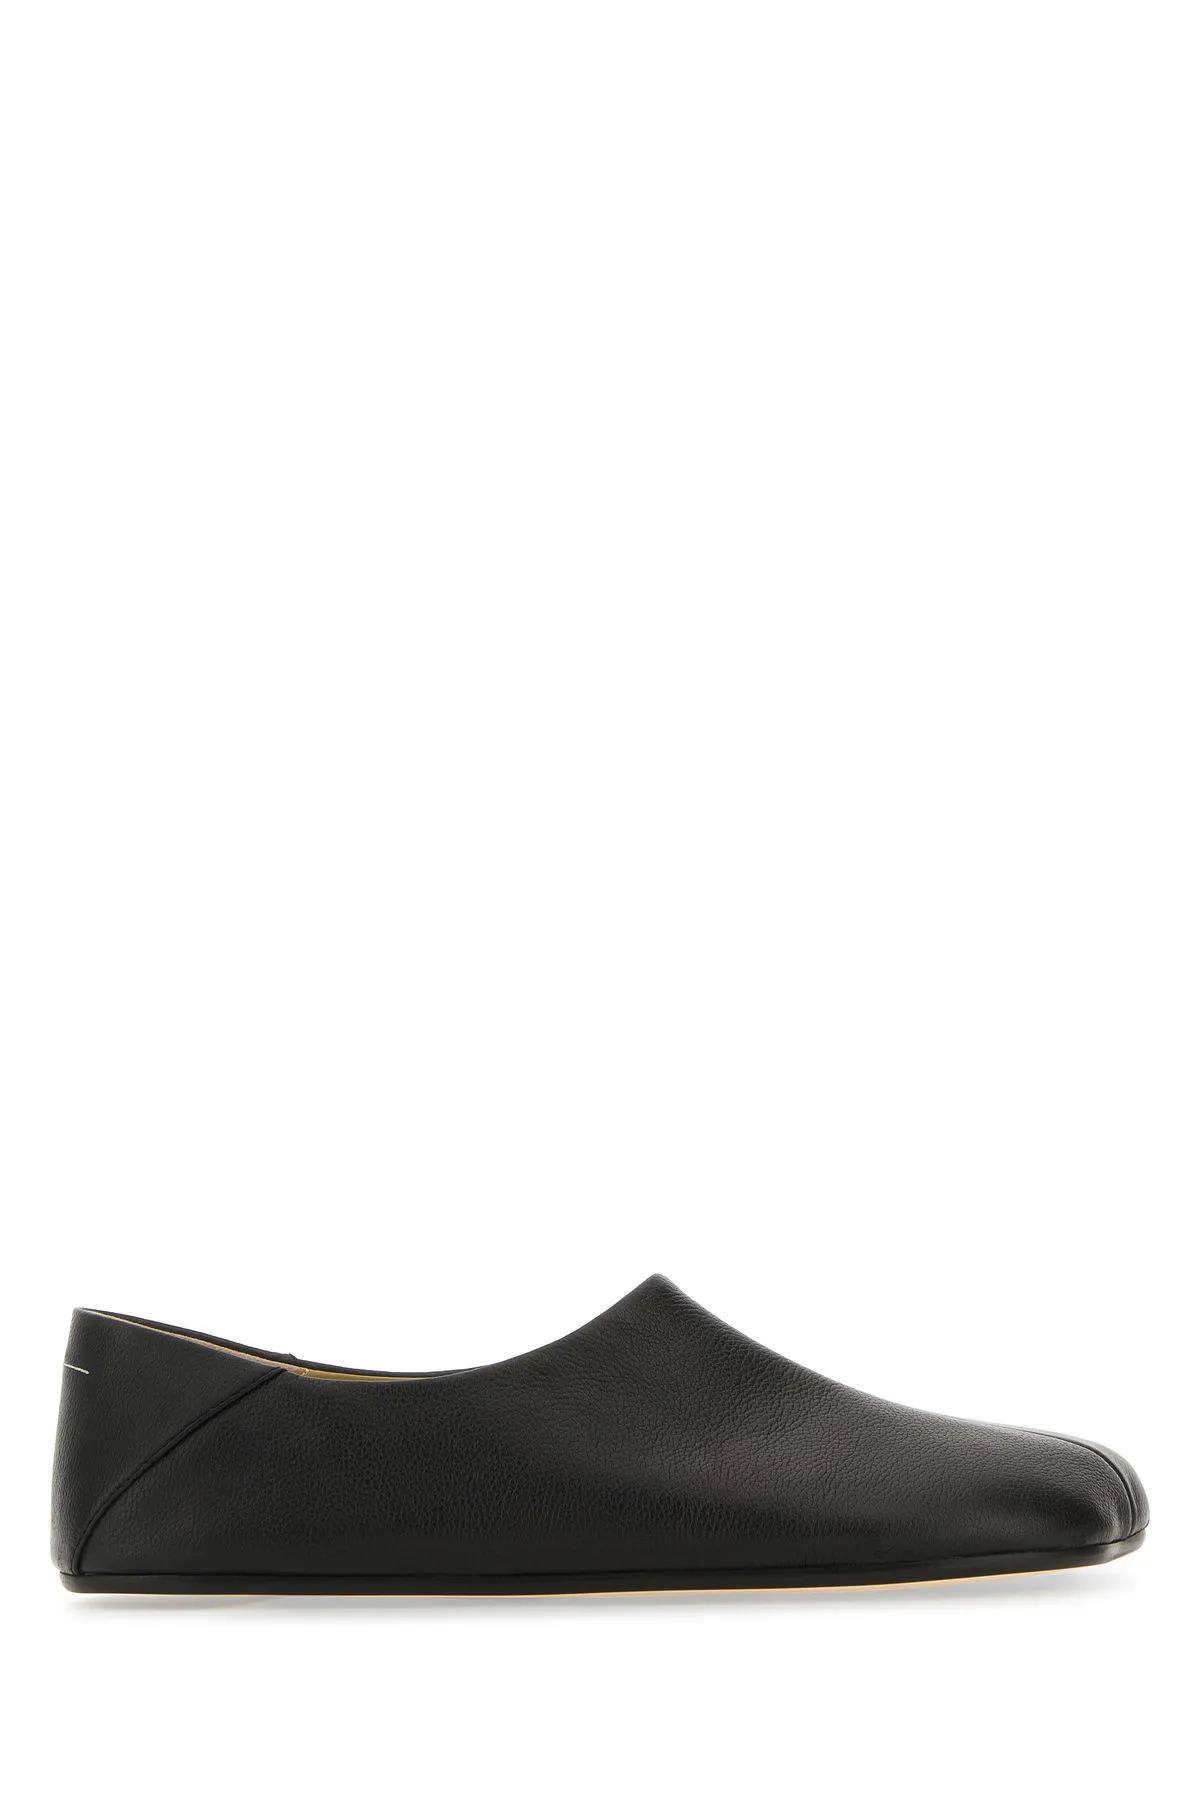 Mm6 Maison Margiela Black Leather Loafers